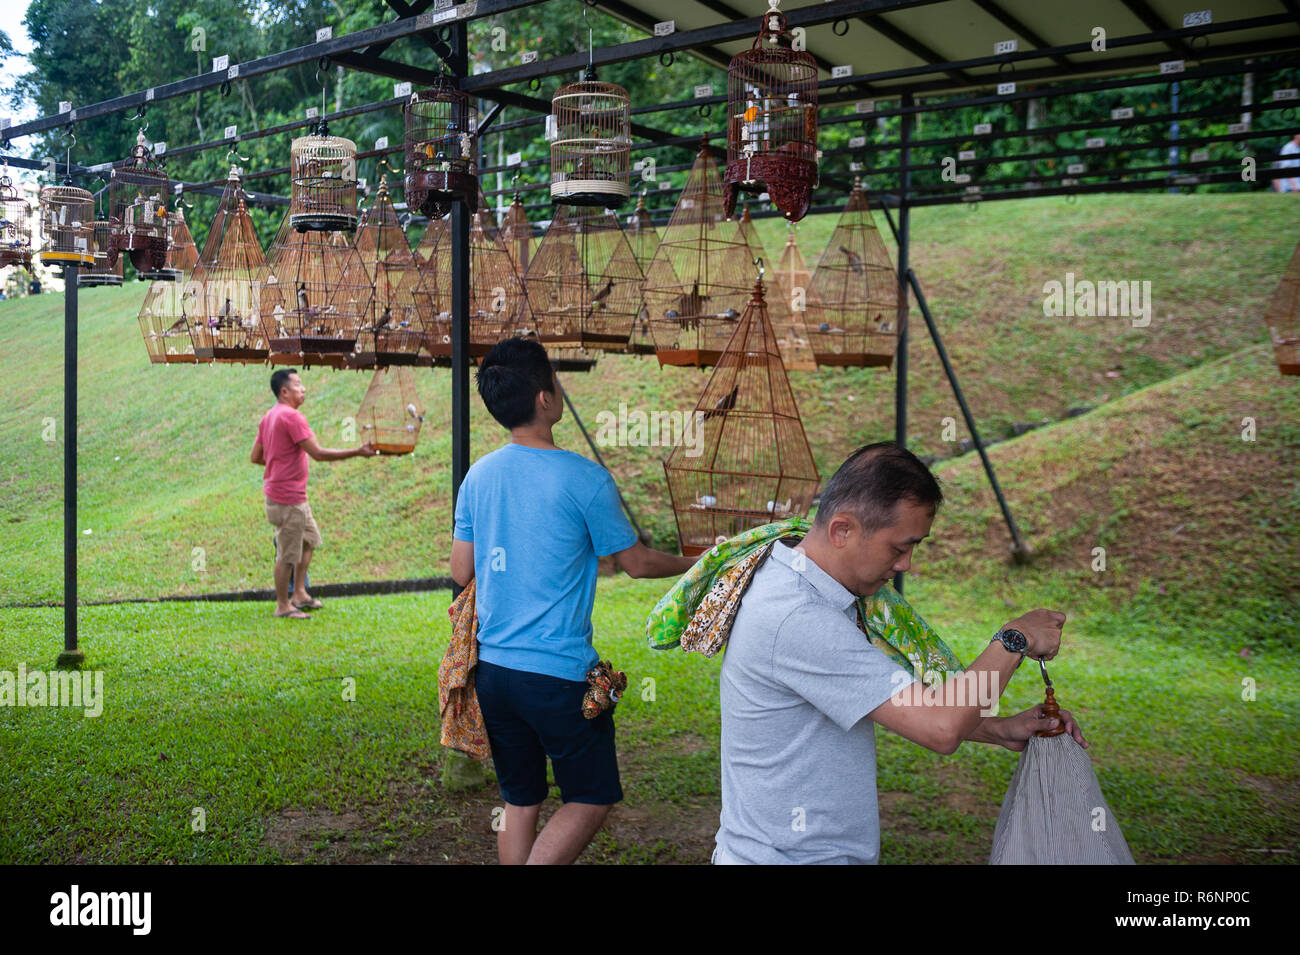 02.12.2018, Singapore, Republic of Singapore, Asia - Bird lovers are seen  hanging up their birdcages at the Kebun Baru Bird Corner in Ang Mo Kio  Stock Photo - Alamy